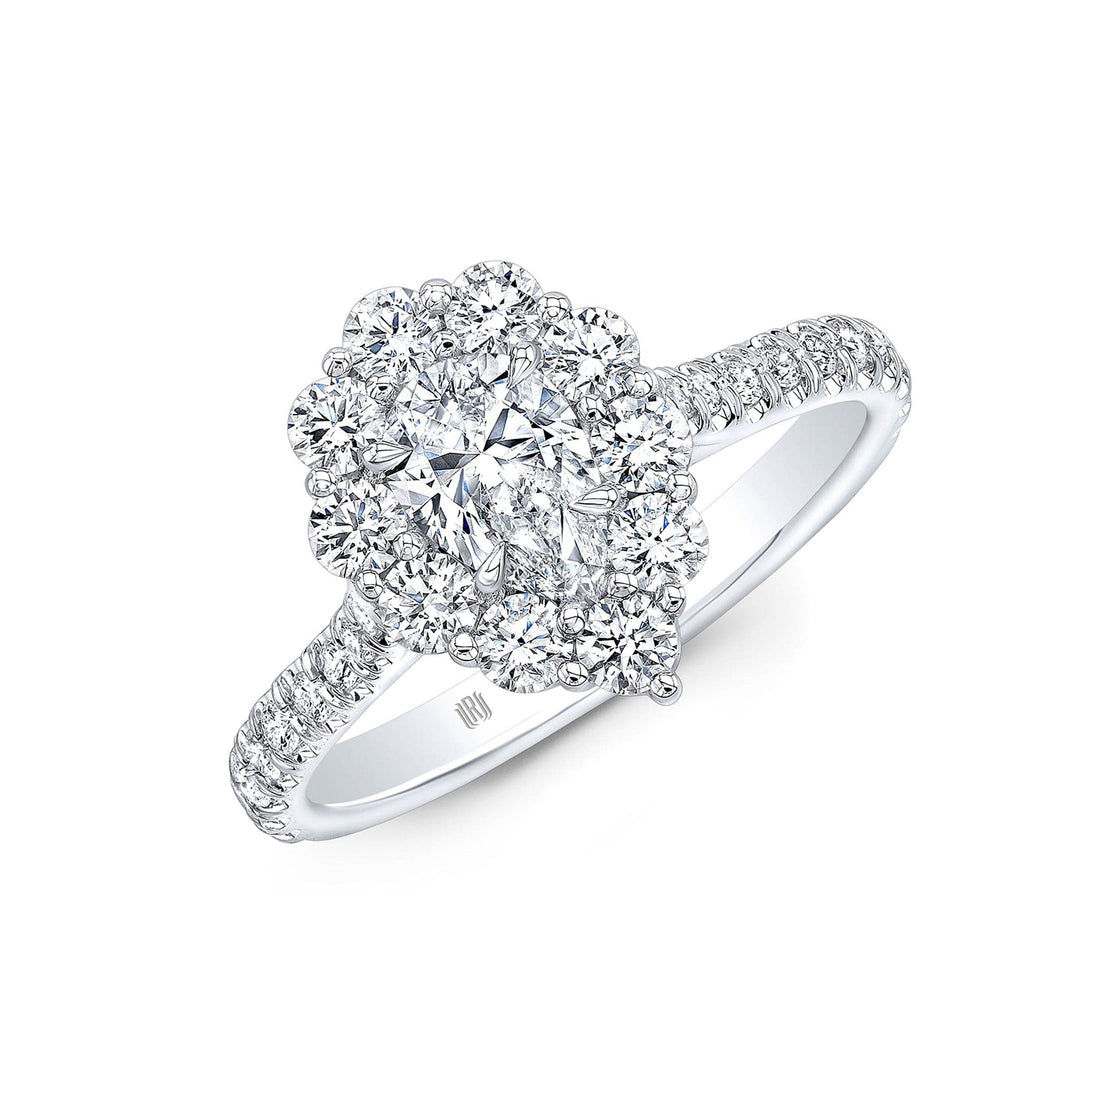 Pear-Shaped Diamond Halo Engagement Ring